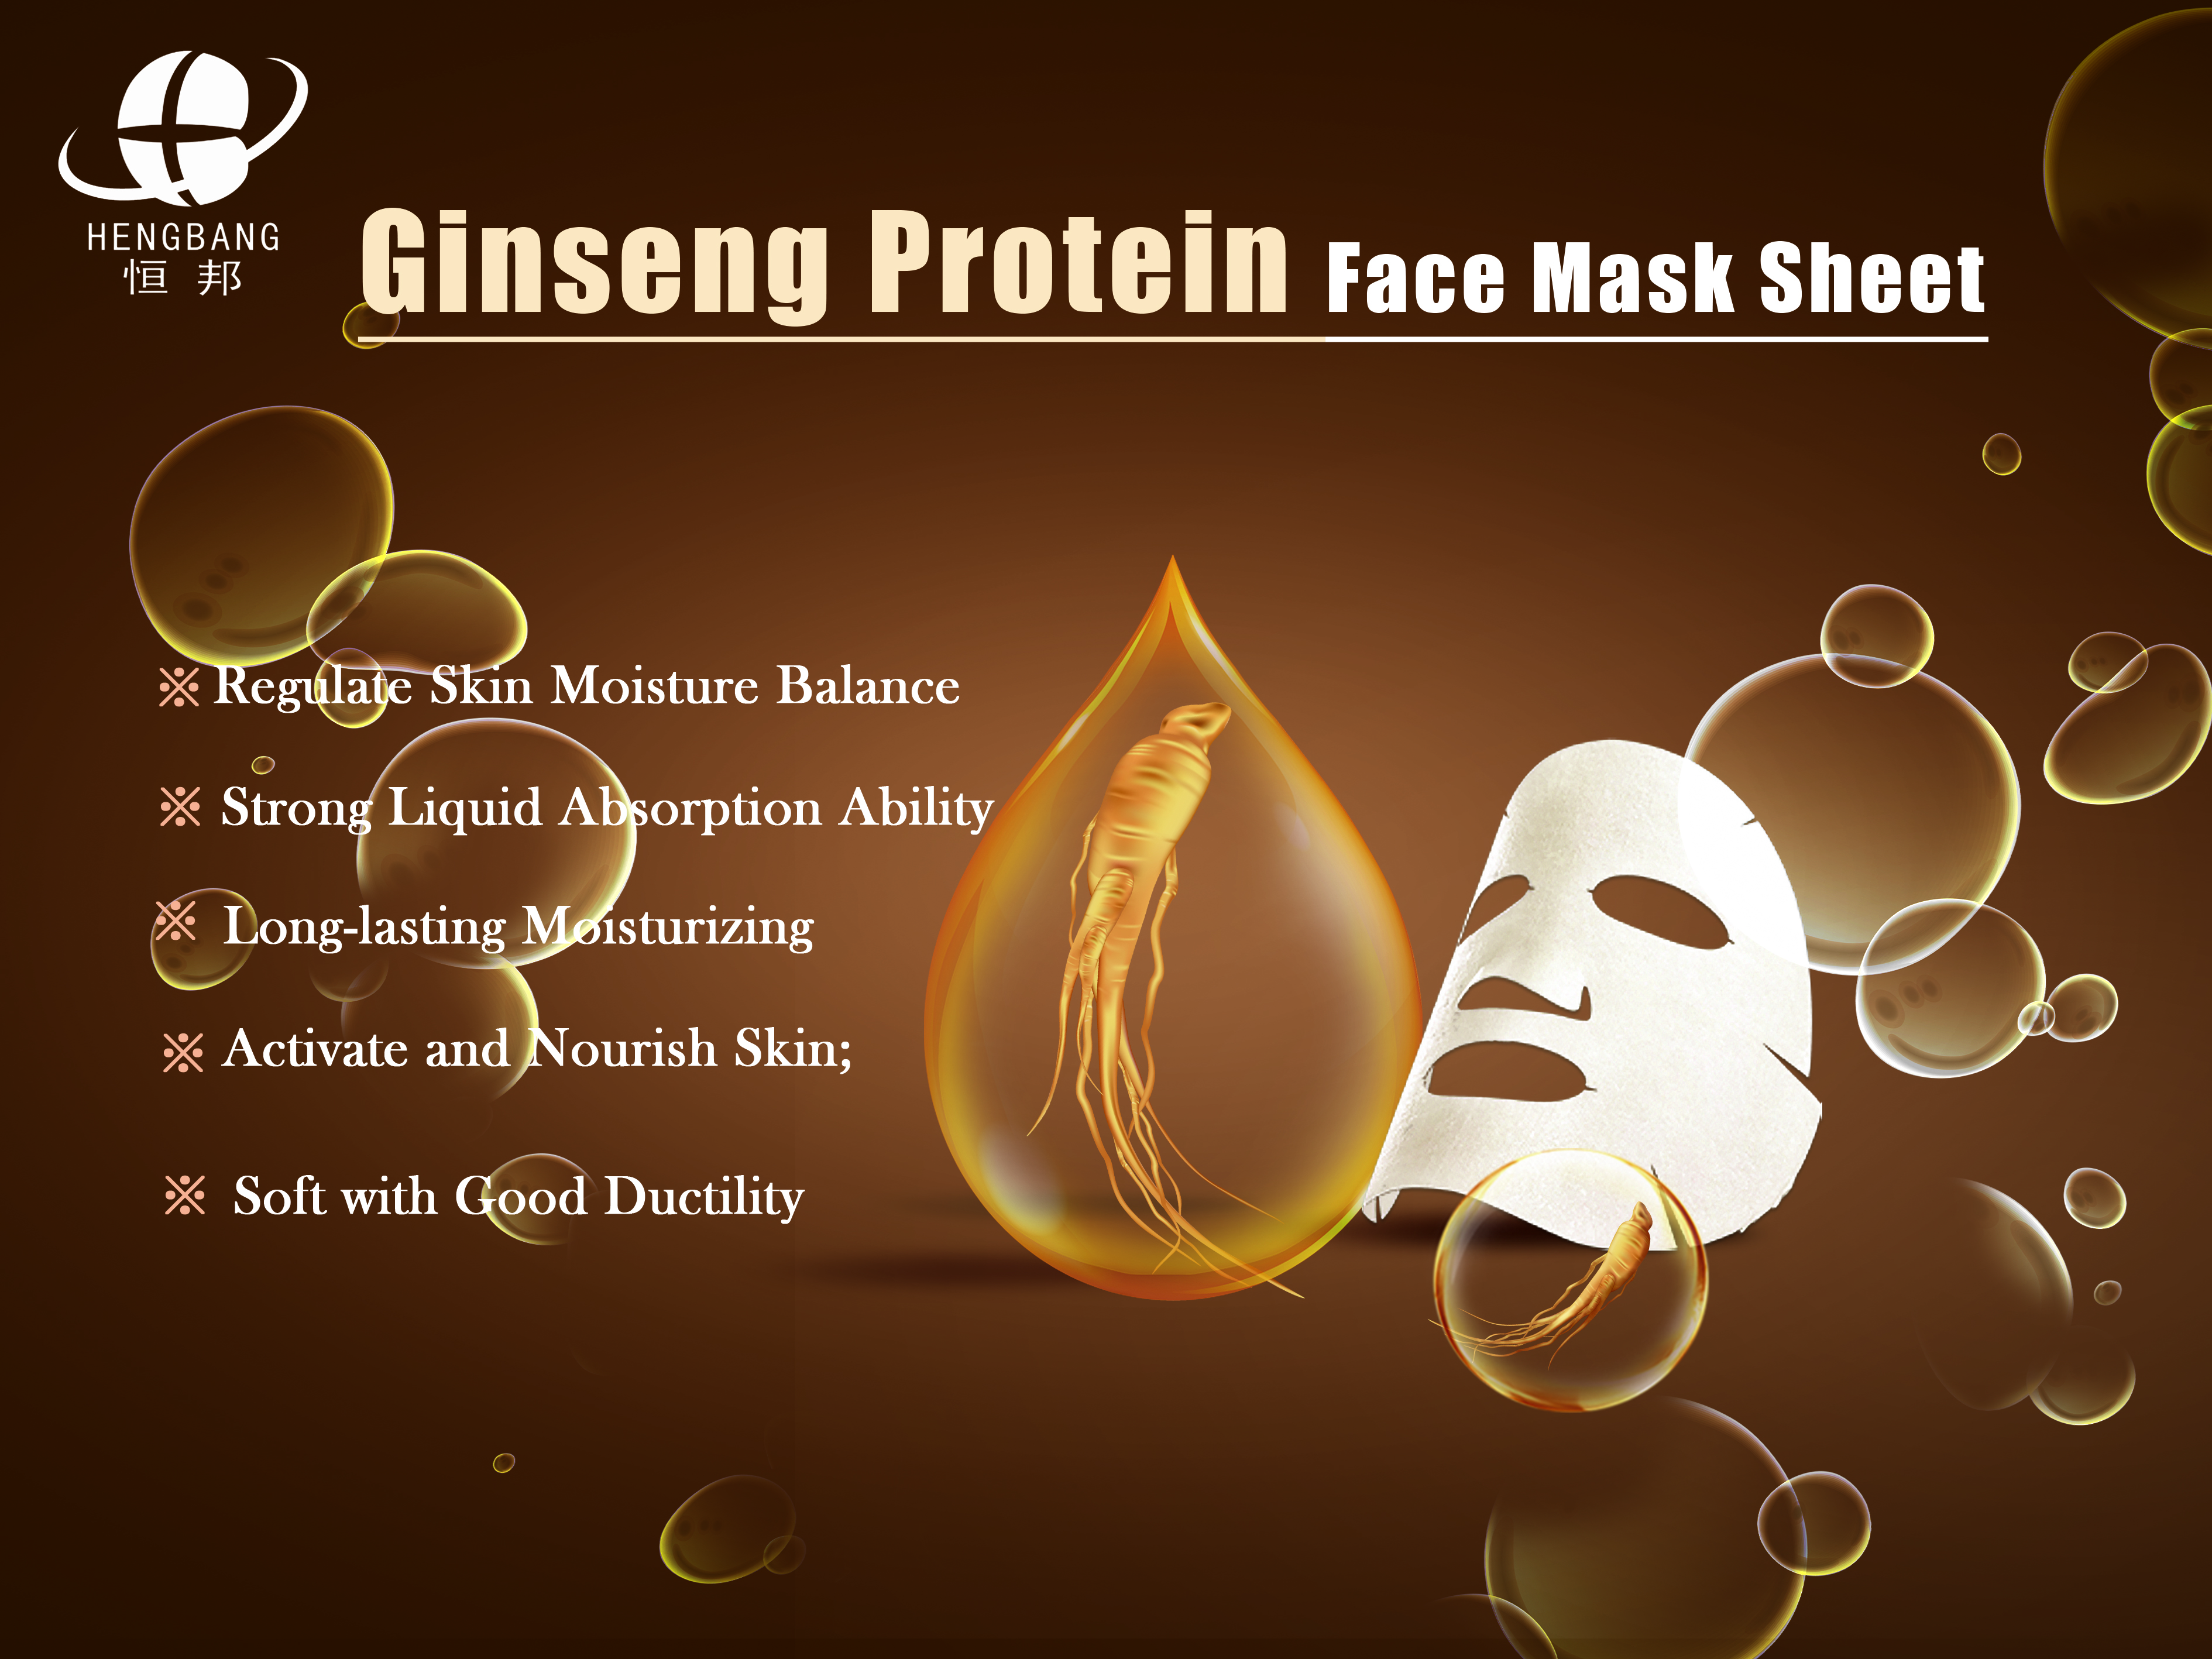 Ginseng Protein Face Mask Sheet